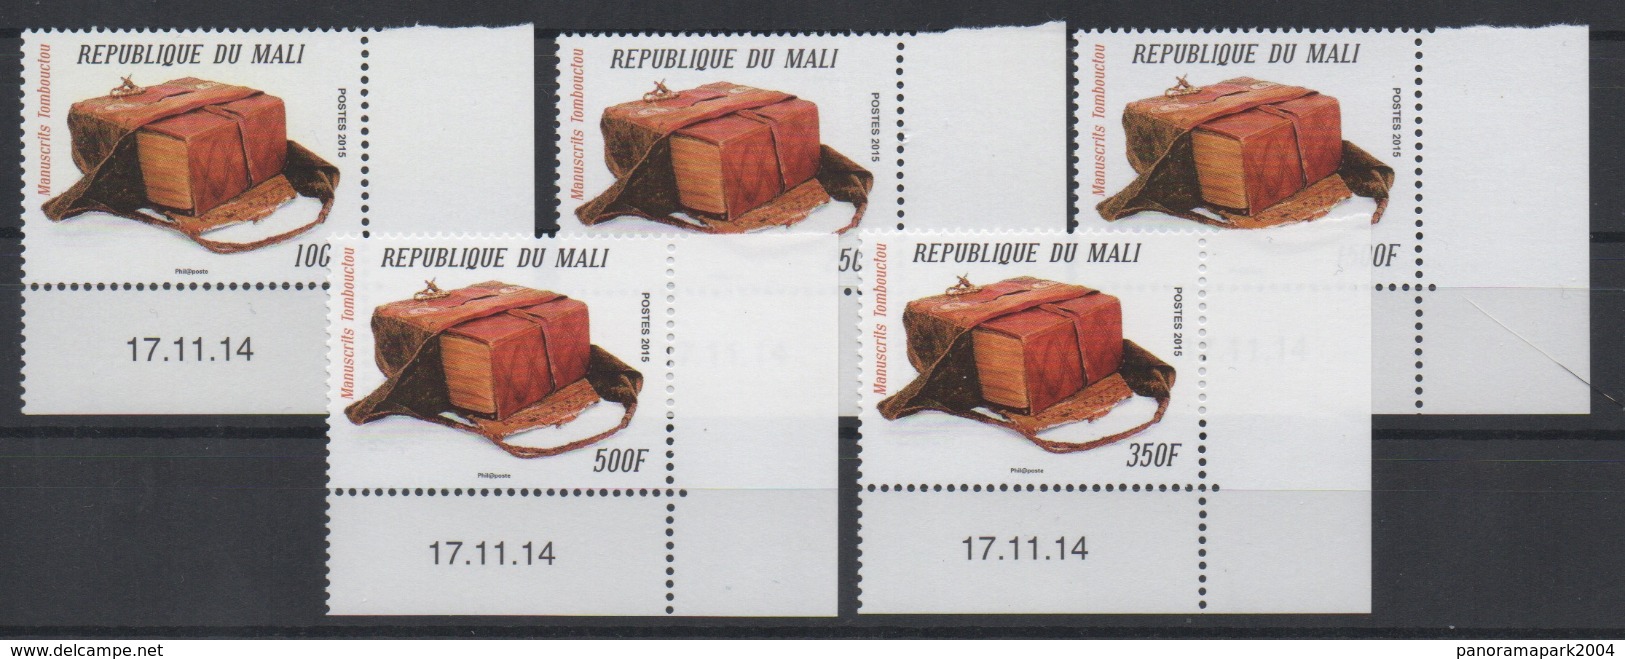 Mali 2015 Mi. 2644 - 2648 Coin Daté 17.11.14 Manuscrits Tombouctou Manuskripte Aus Timbuktu MNH 5val. - Mali (1959-...)